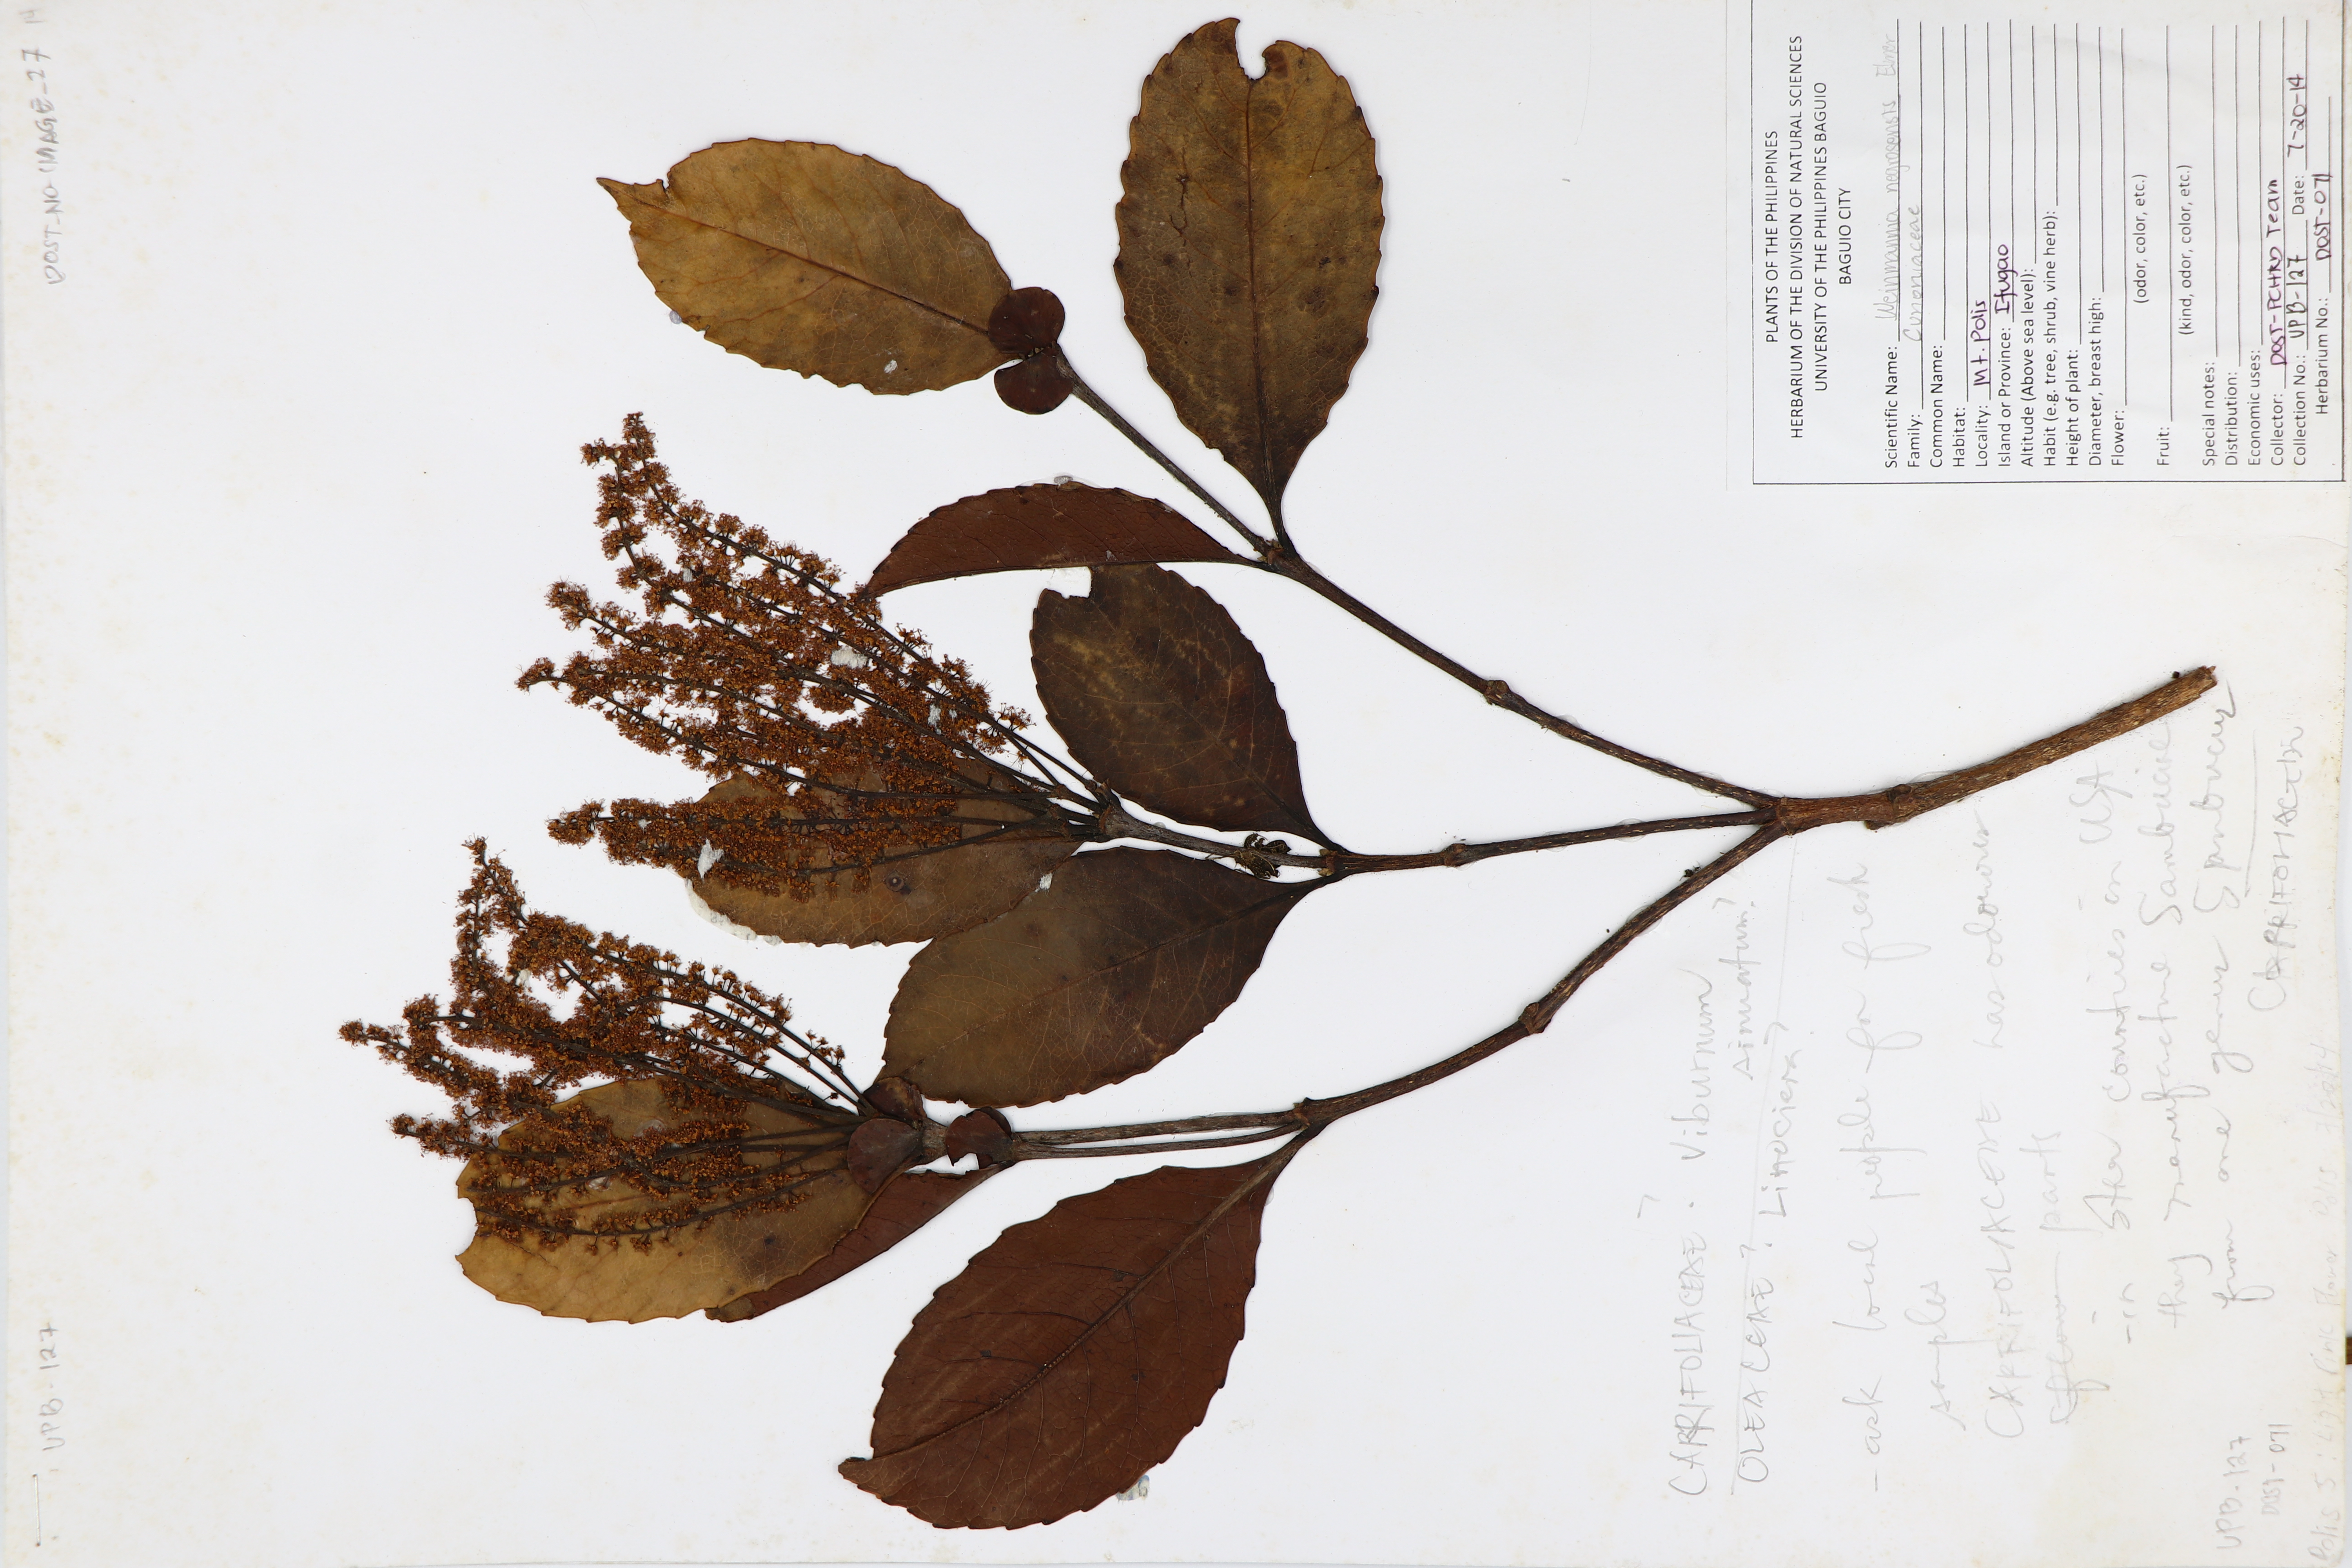 Weinmannia negrosensis